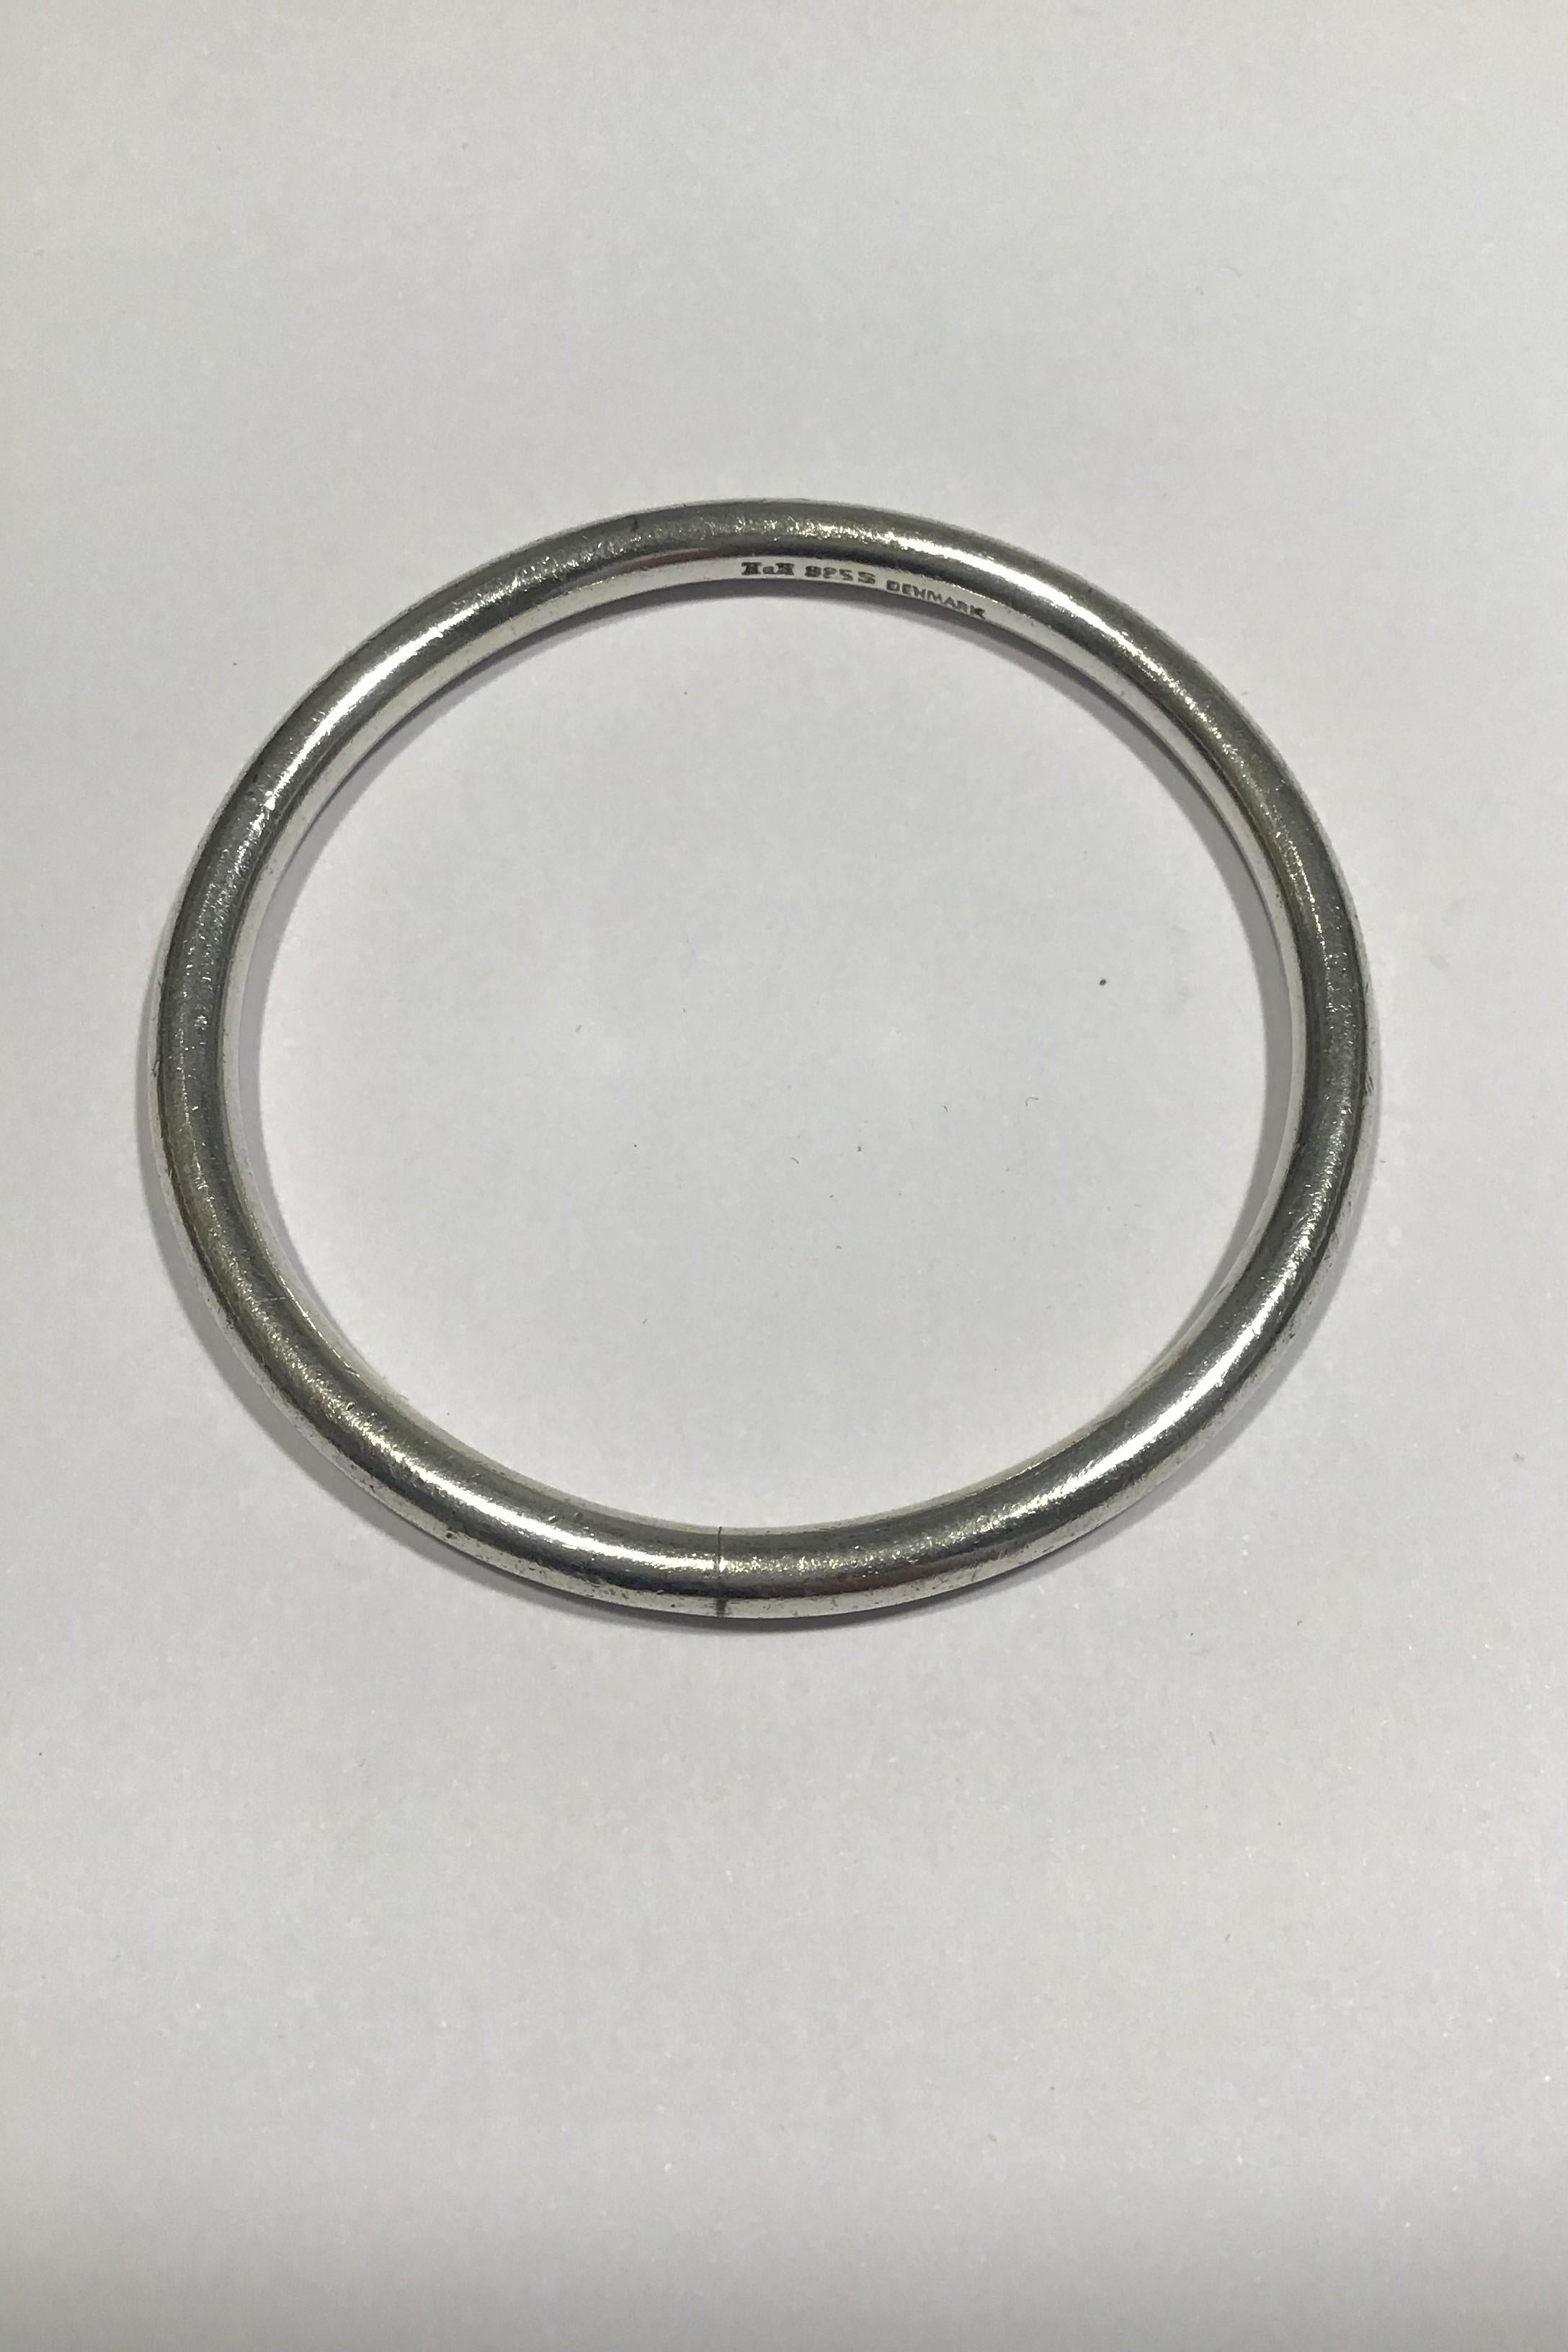 Hans Hansen bracelet made of sterling silver. Diameter measures 7 cm (2 3/4 in). Weighs 49 g / 1.75 
oz